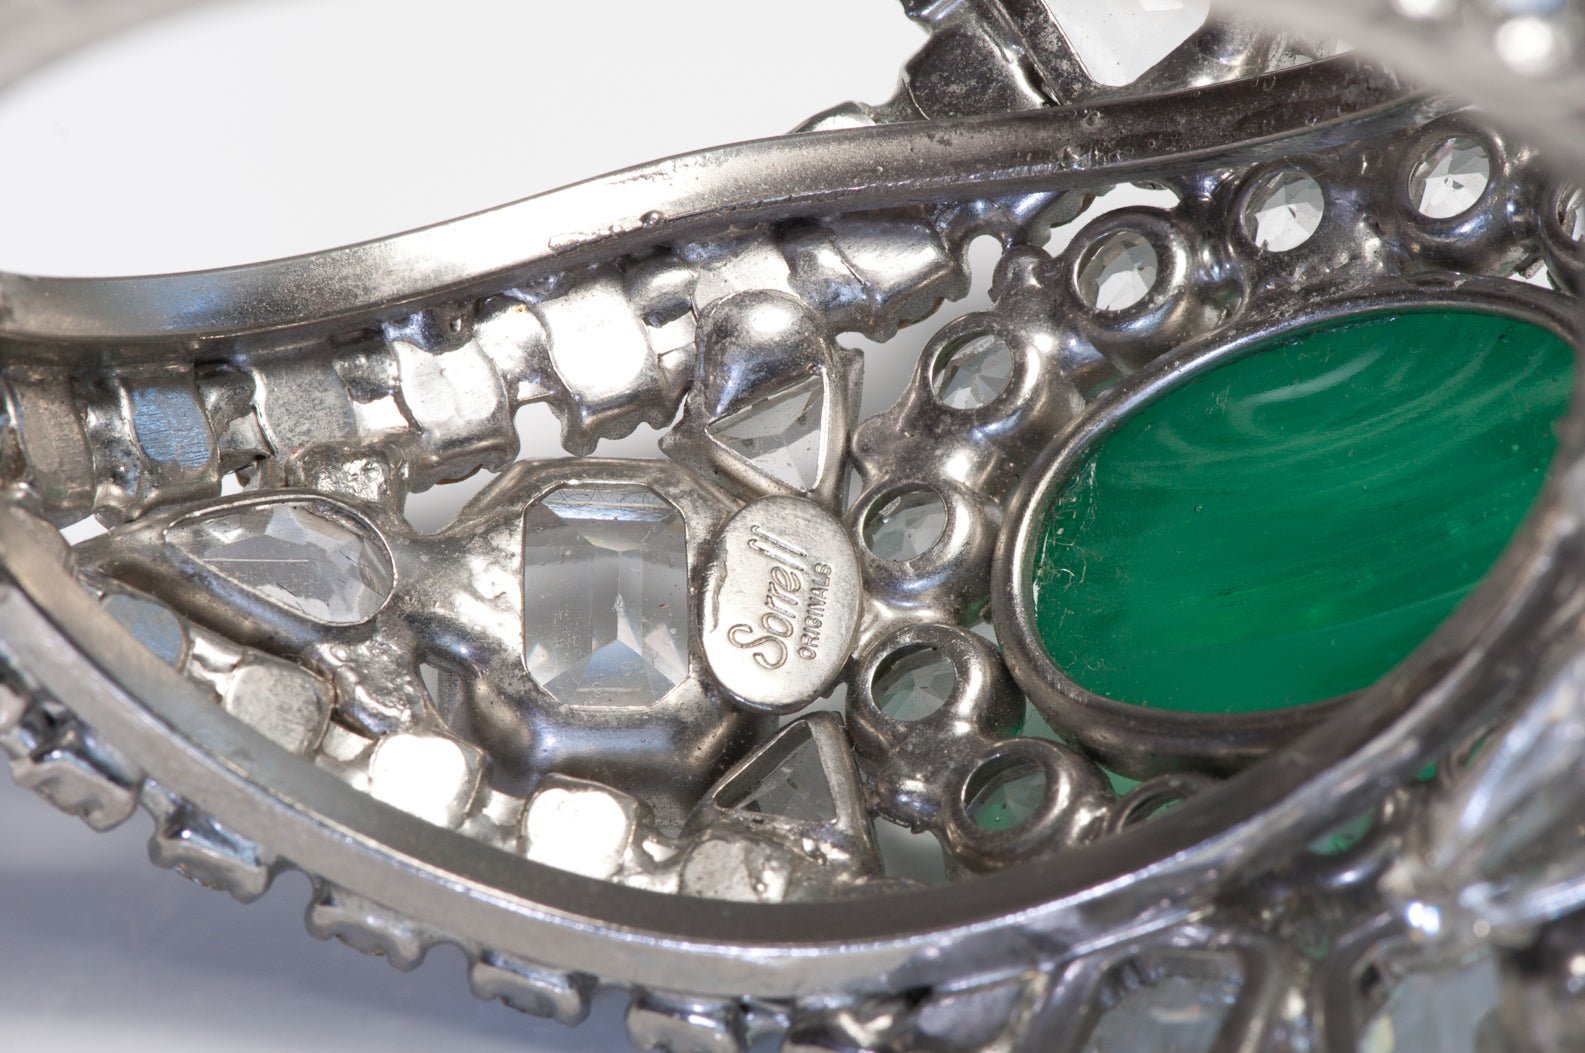 Robert Sorrell Wide Green Cabochon Glass Crystal Cuff Bracelet